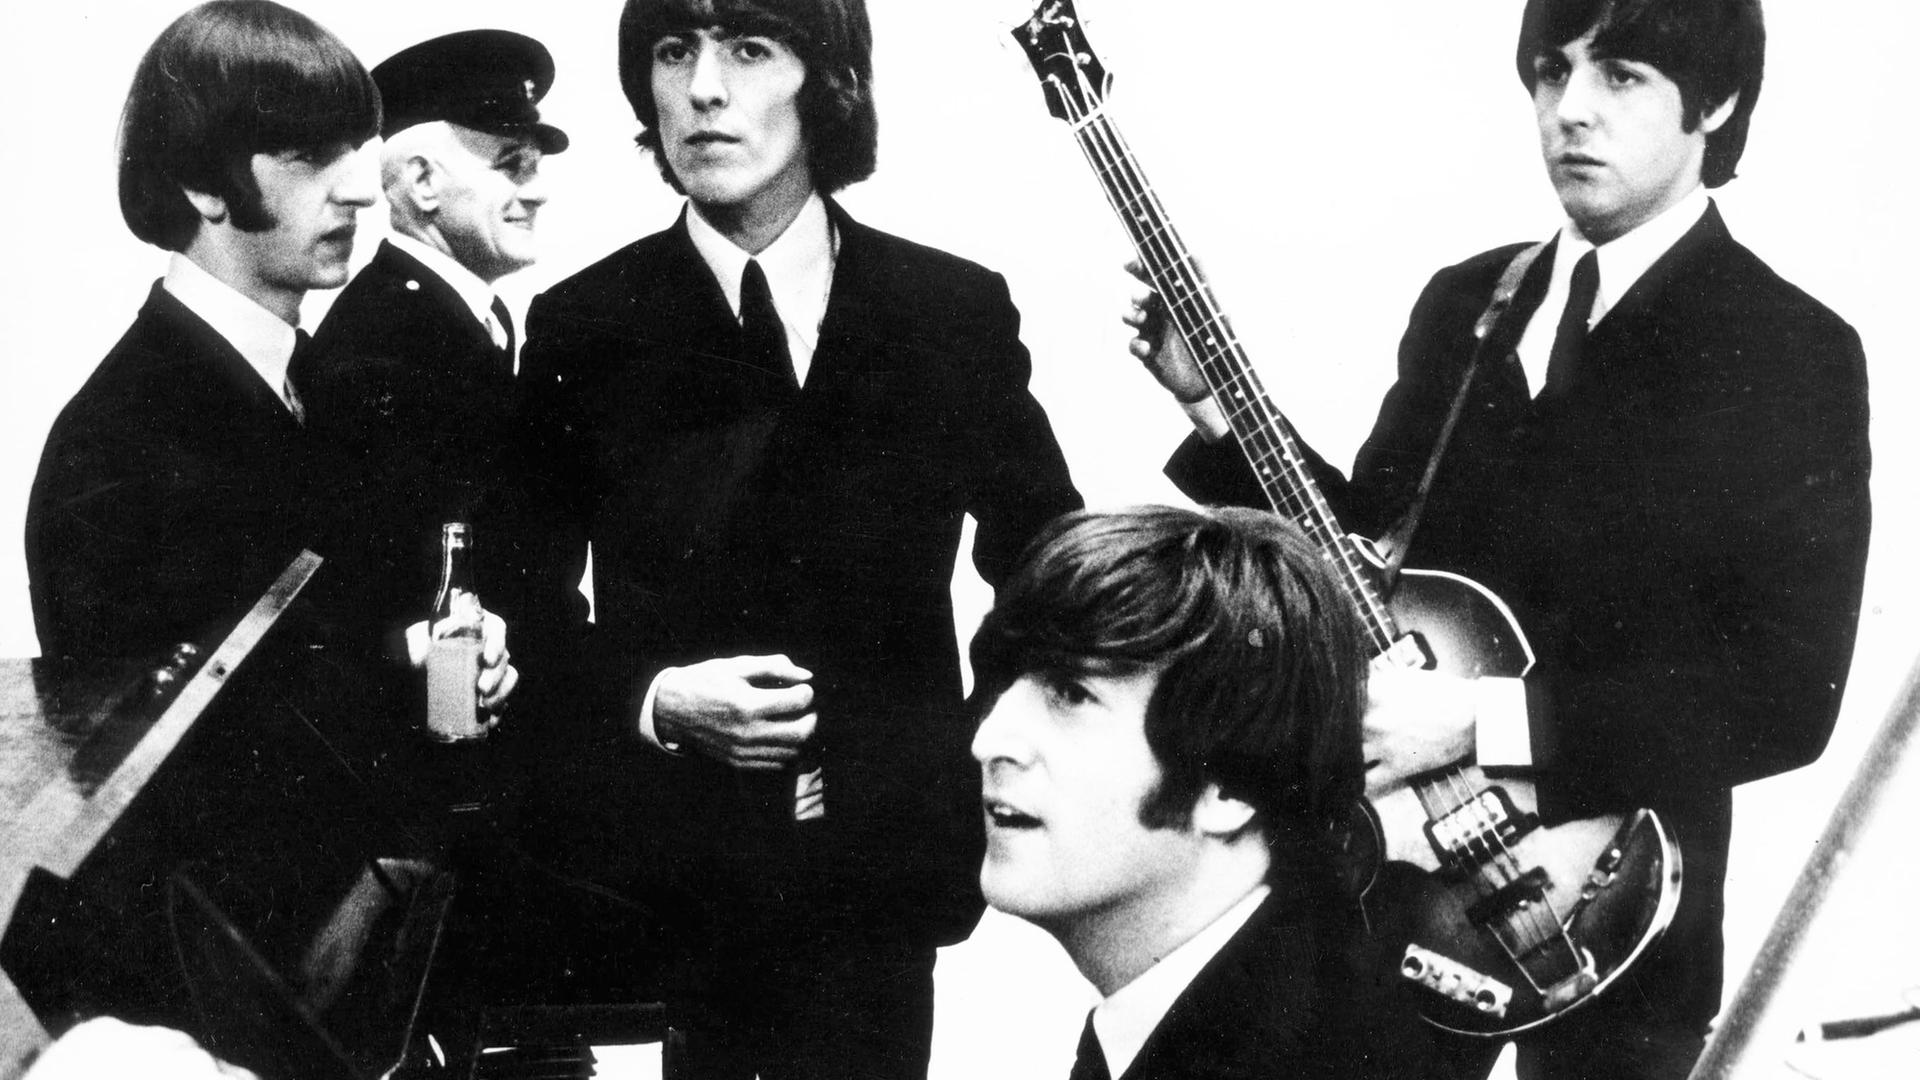 Die Beatles 1964 im Studio, John Lennon am Klavier. Dahinter: Ringo Starr, George Harrison und Paul McCartney.